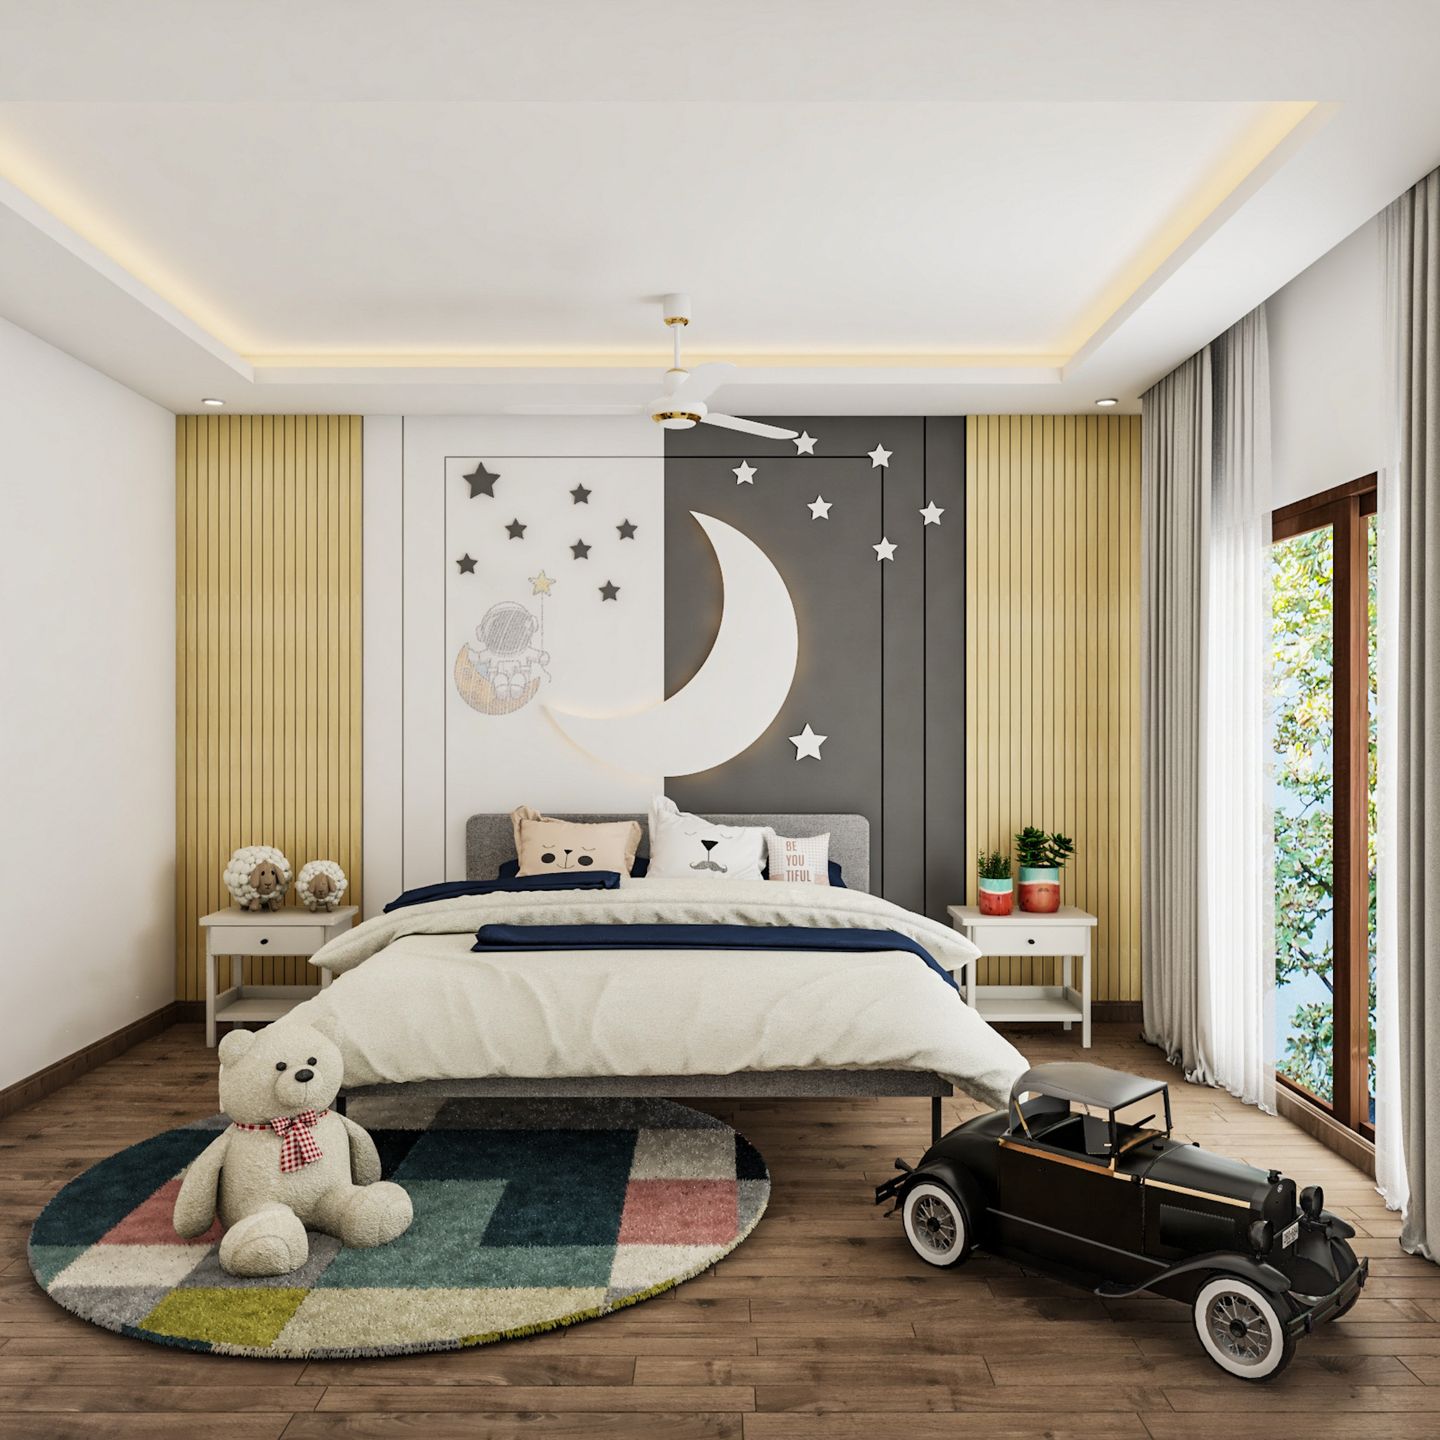 Compact Kid's Bedroom Design With A Floor Rug - Livspace